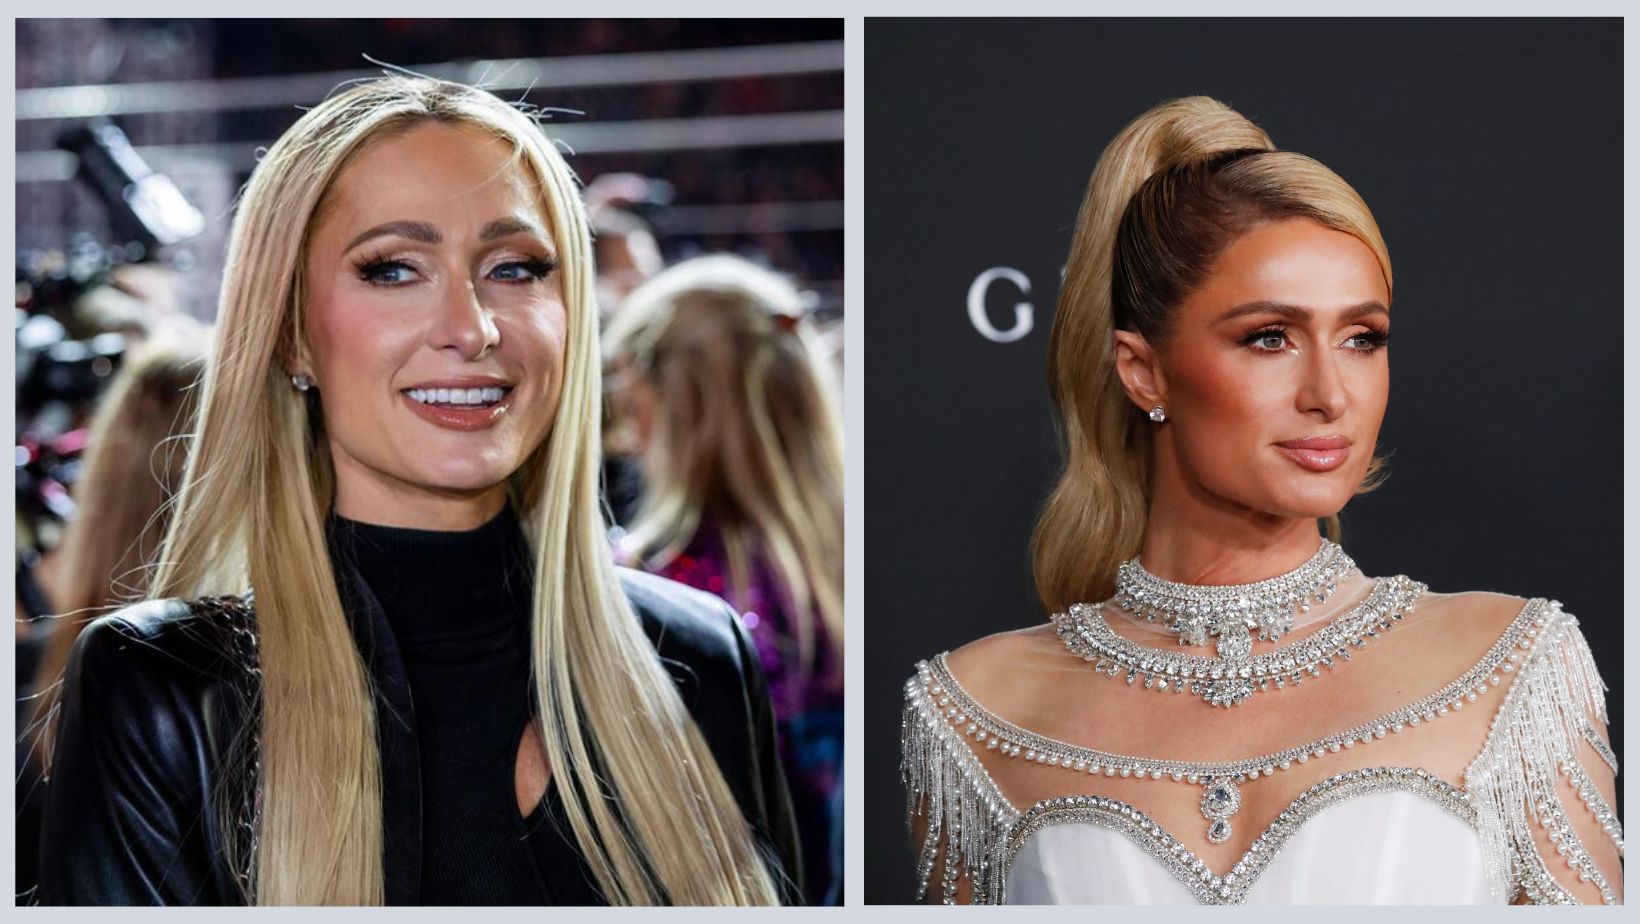 Paris Hilton Nose Job: Did She Undergo Plastic Surgery?